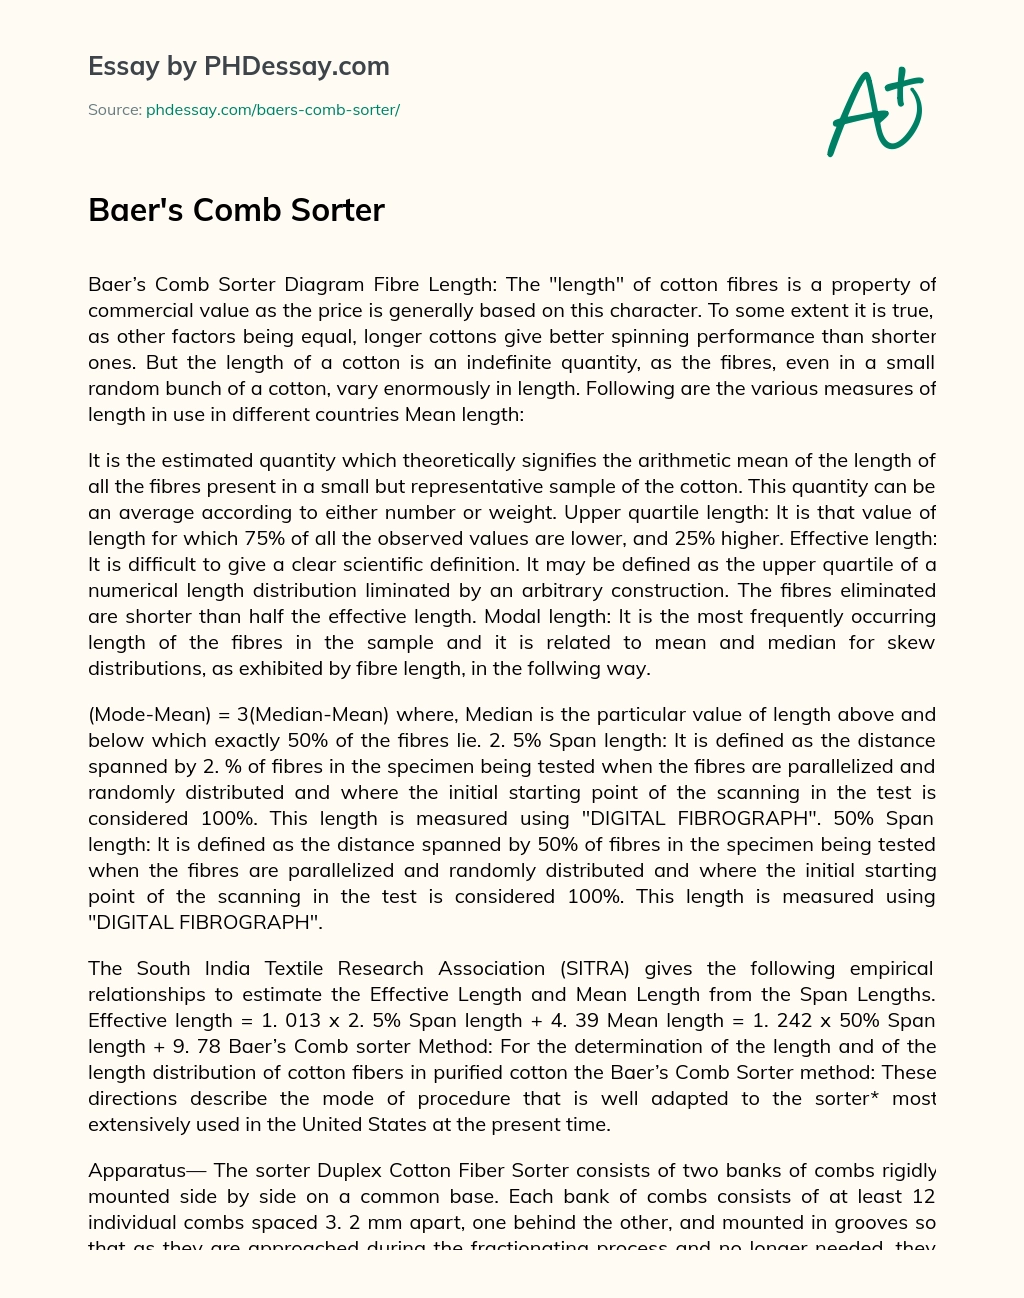 Baer’s Comb Sorter essay